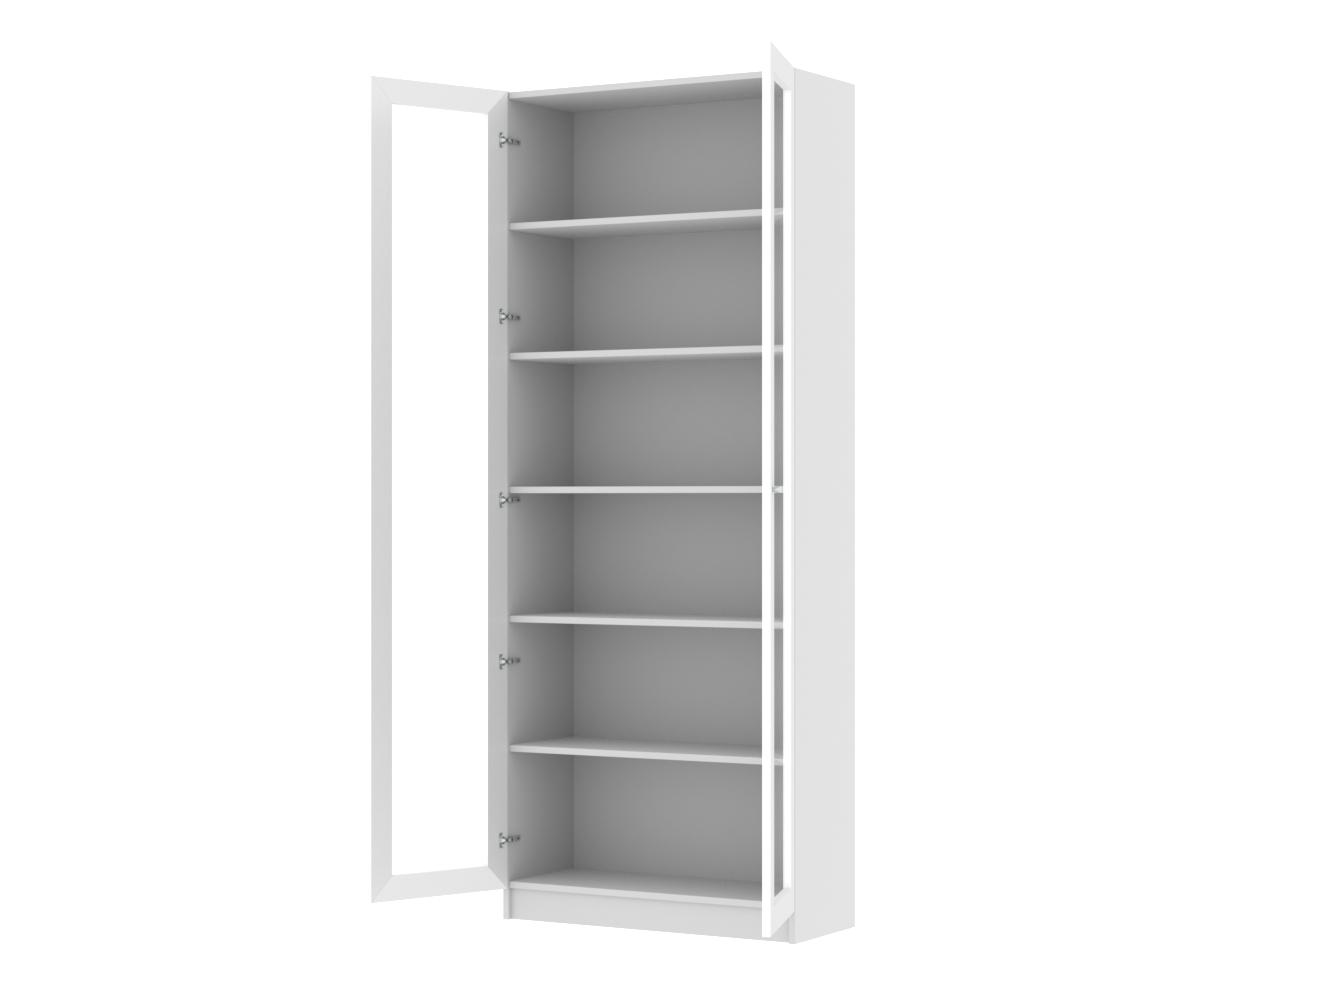  Книжный шкаф Билли 336 white ИКЕА (IKEA) изображение товара